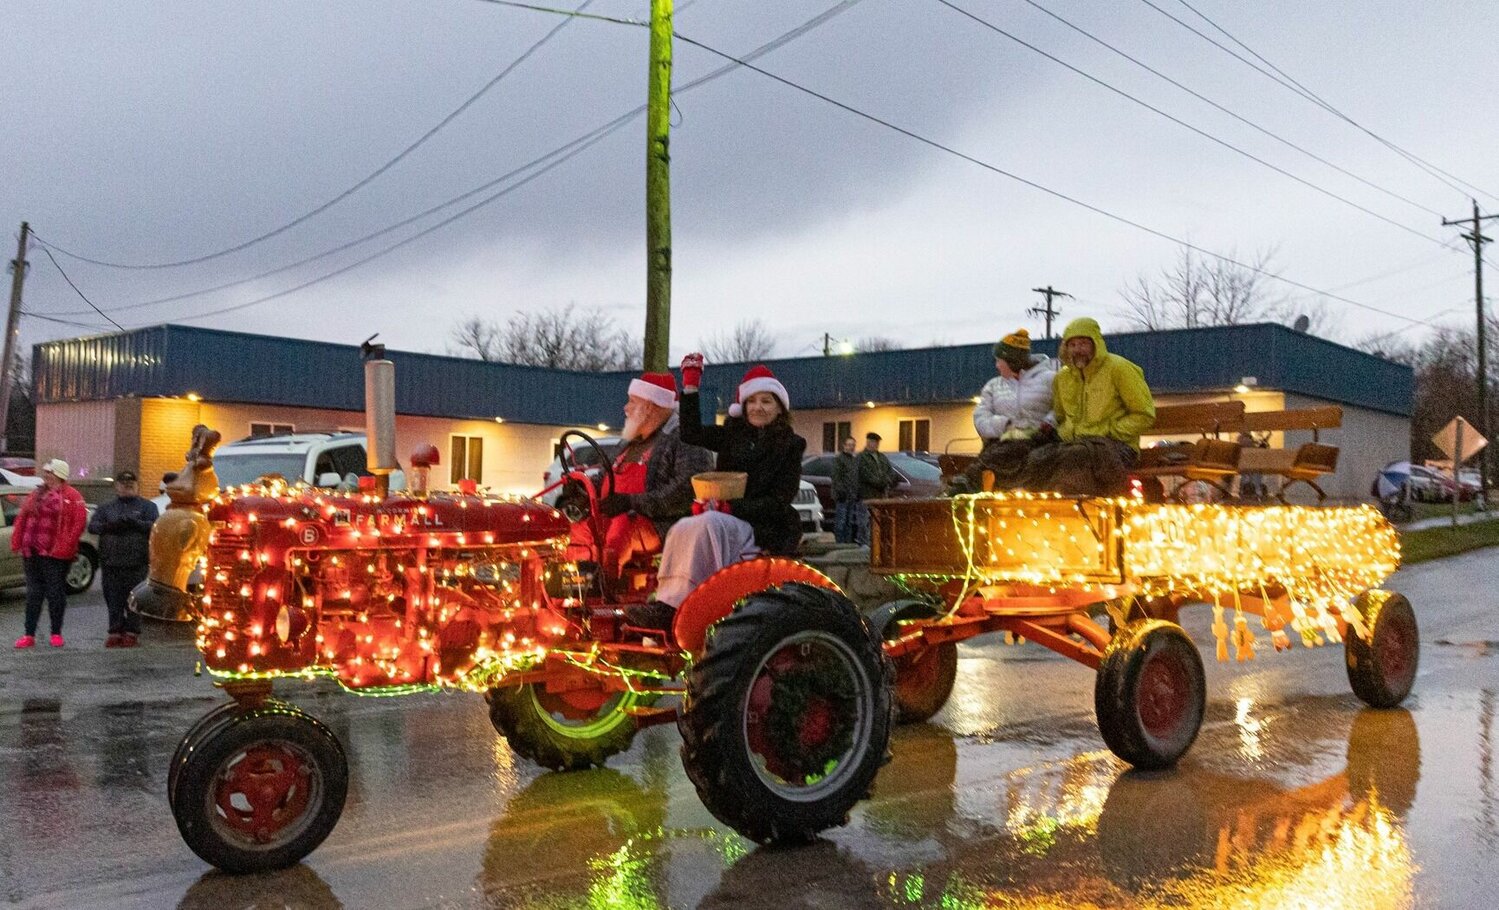 Despite a rainy start, the Rogersville Christmas Parade kept tractoring along through Saturday evening.